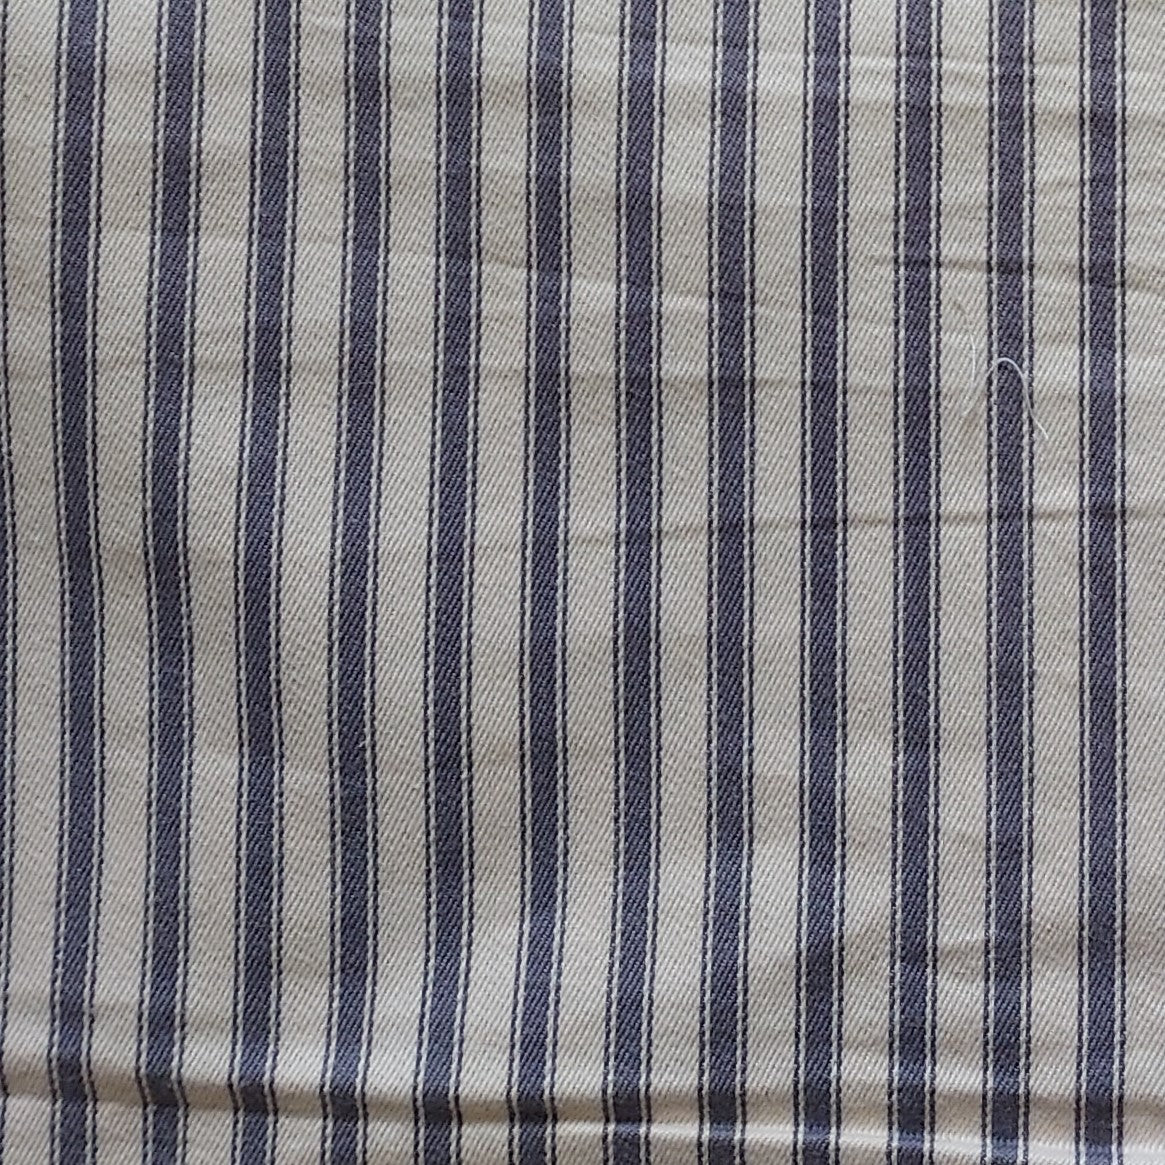 Canvas-Mock Ticking Stripes Cotton Fabric - Grey